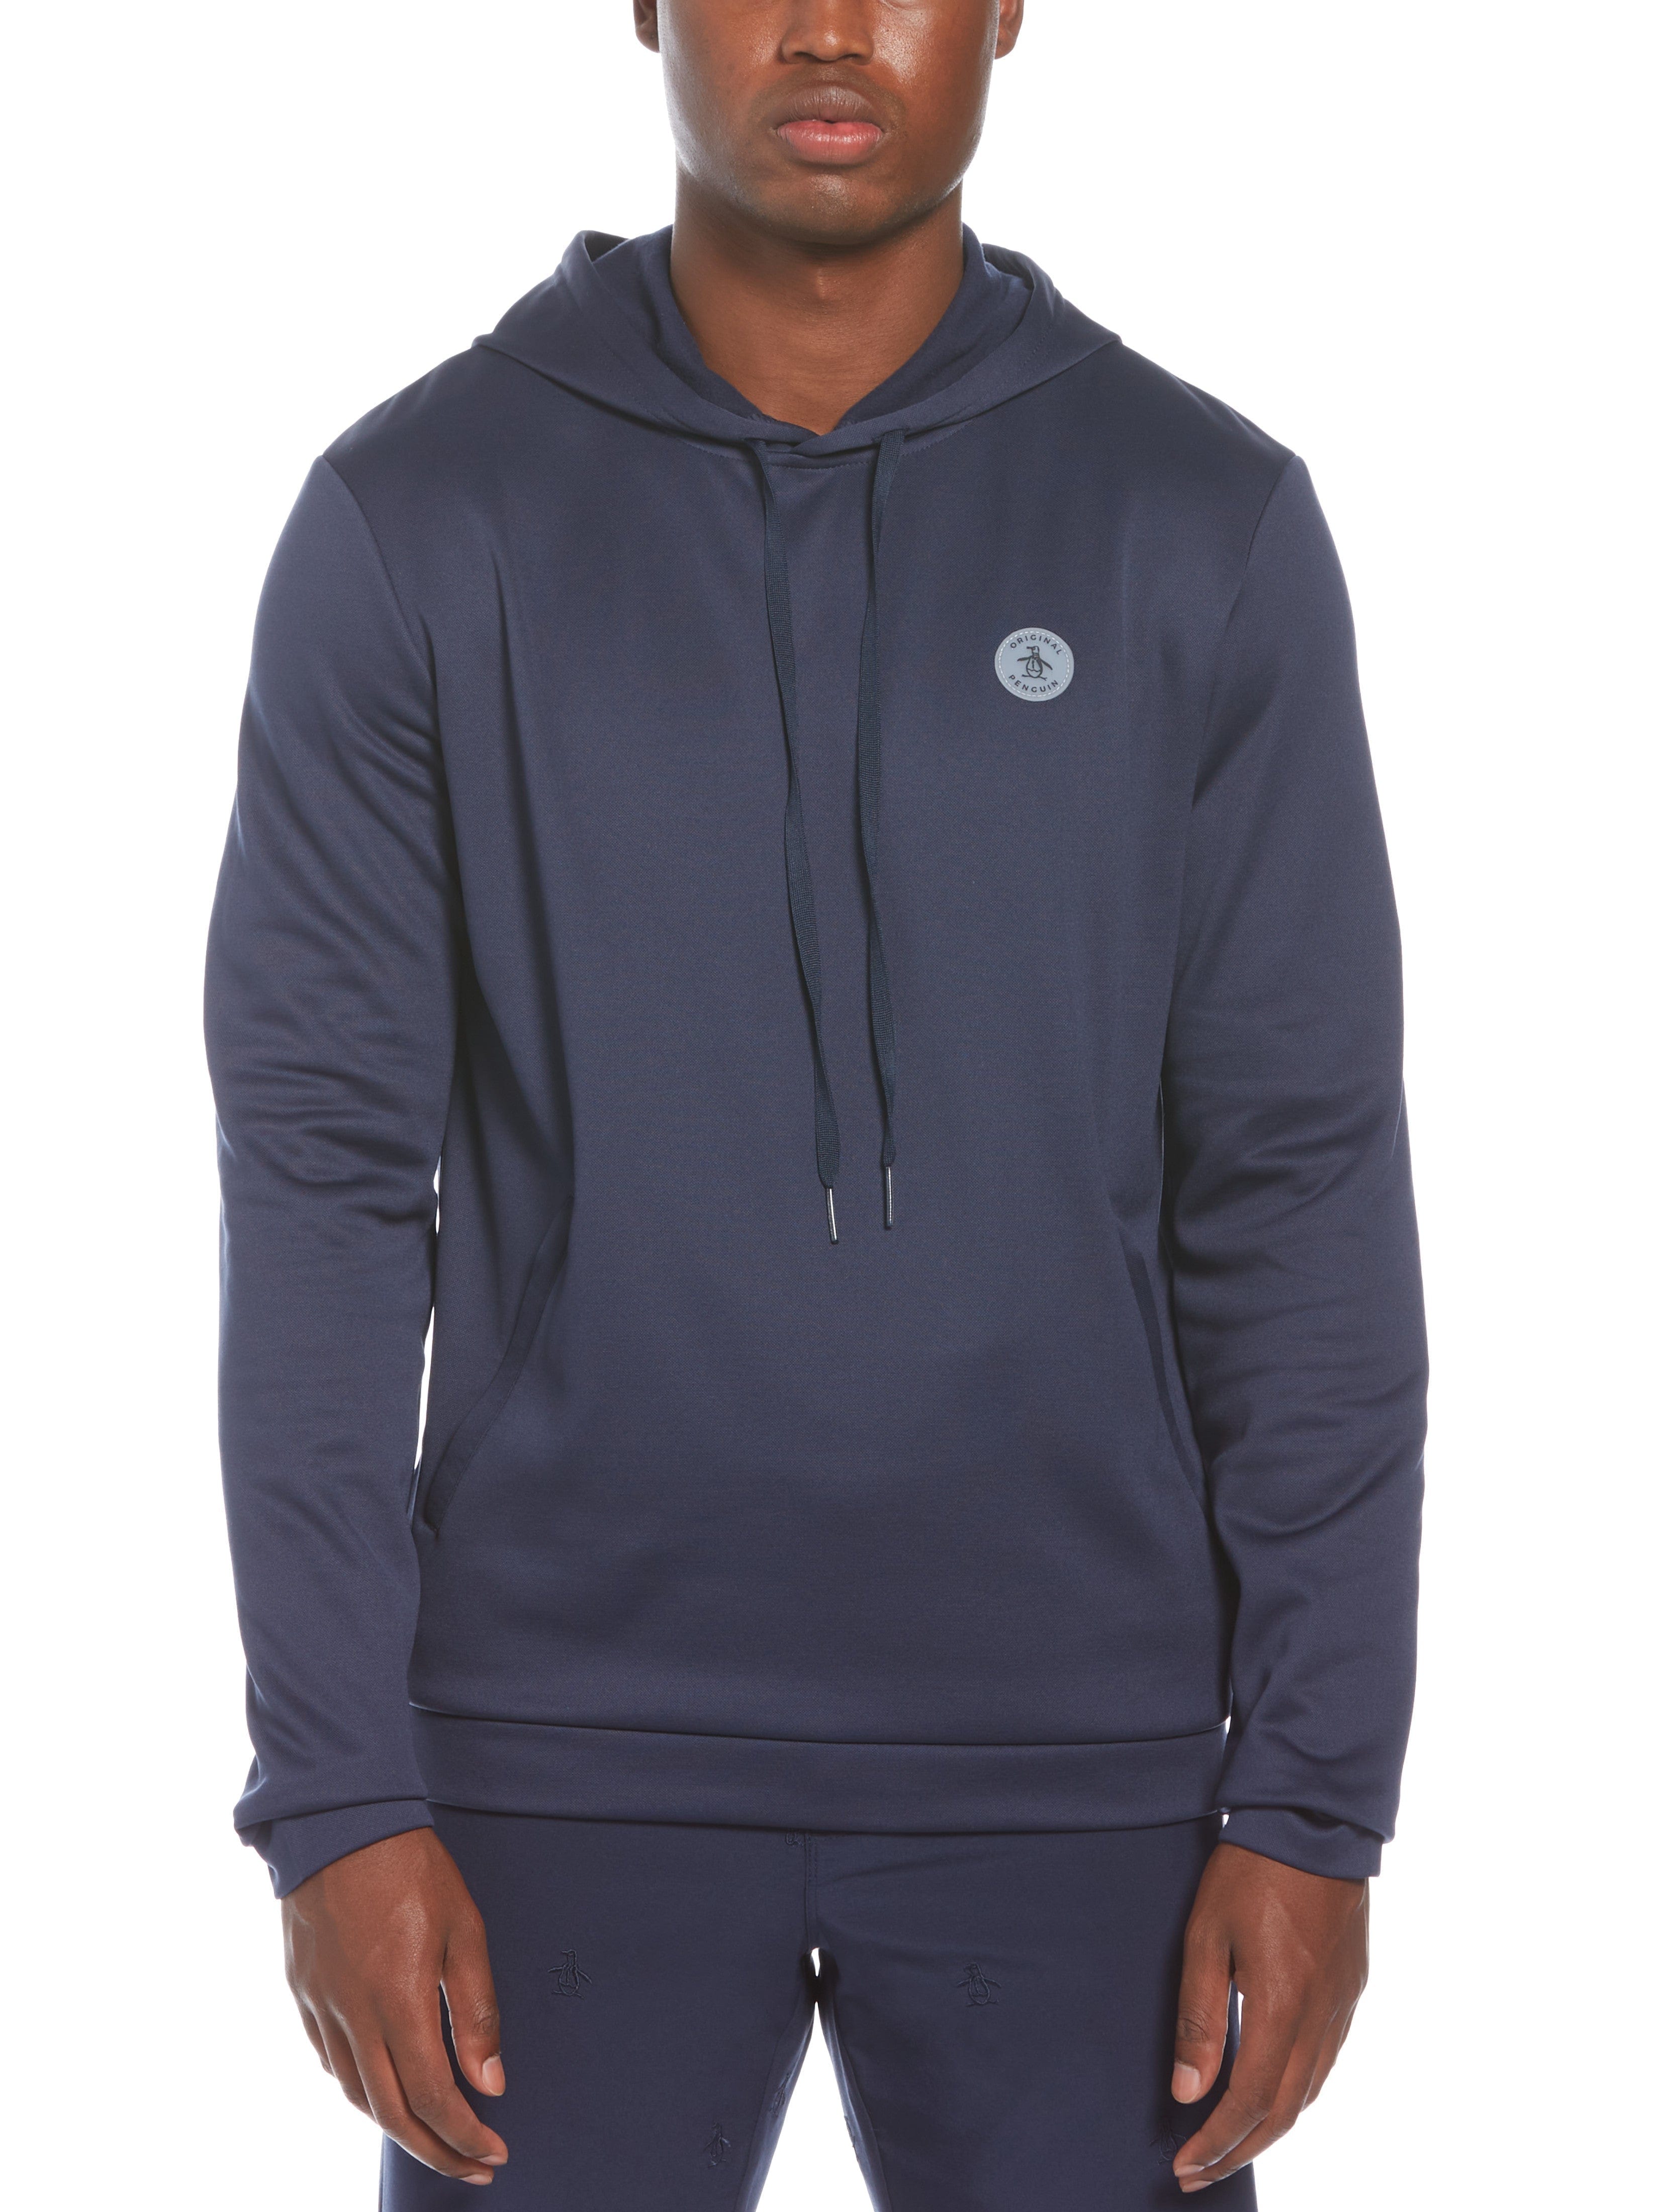 Original Penguin Mens Midweight Layering Golf Hoodie Jacket Top, Size Large, Dark Navy Blue, 100% Polyester | Golf Apparel Shop